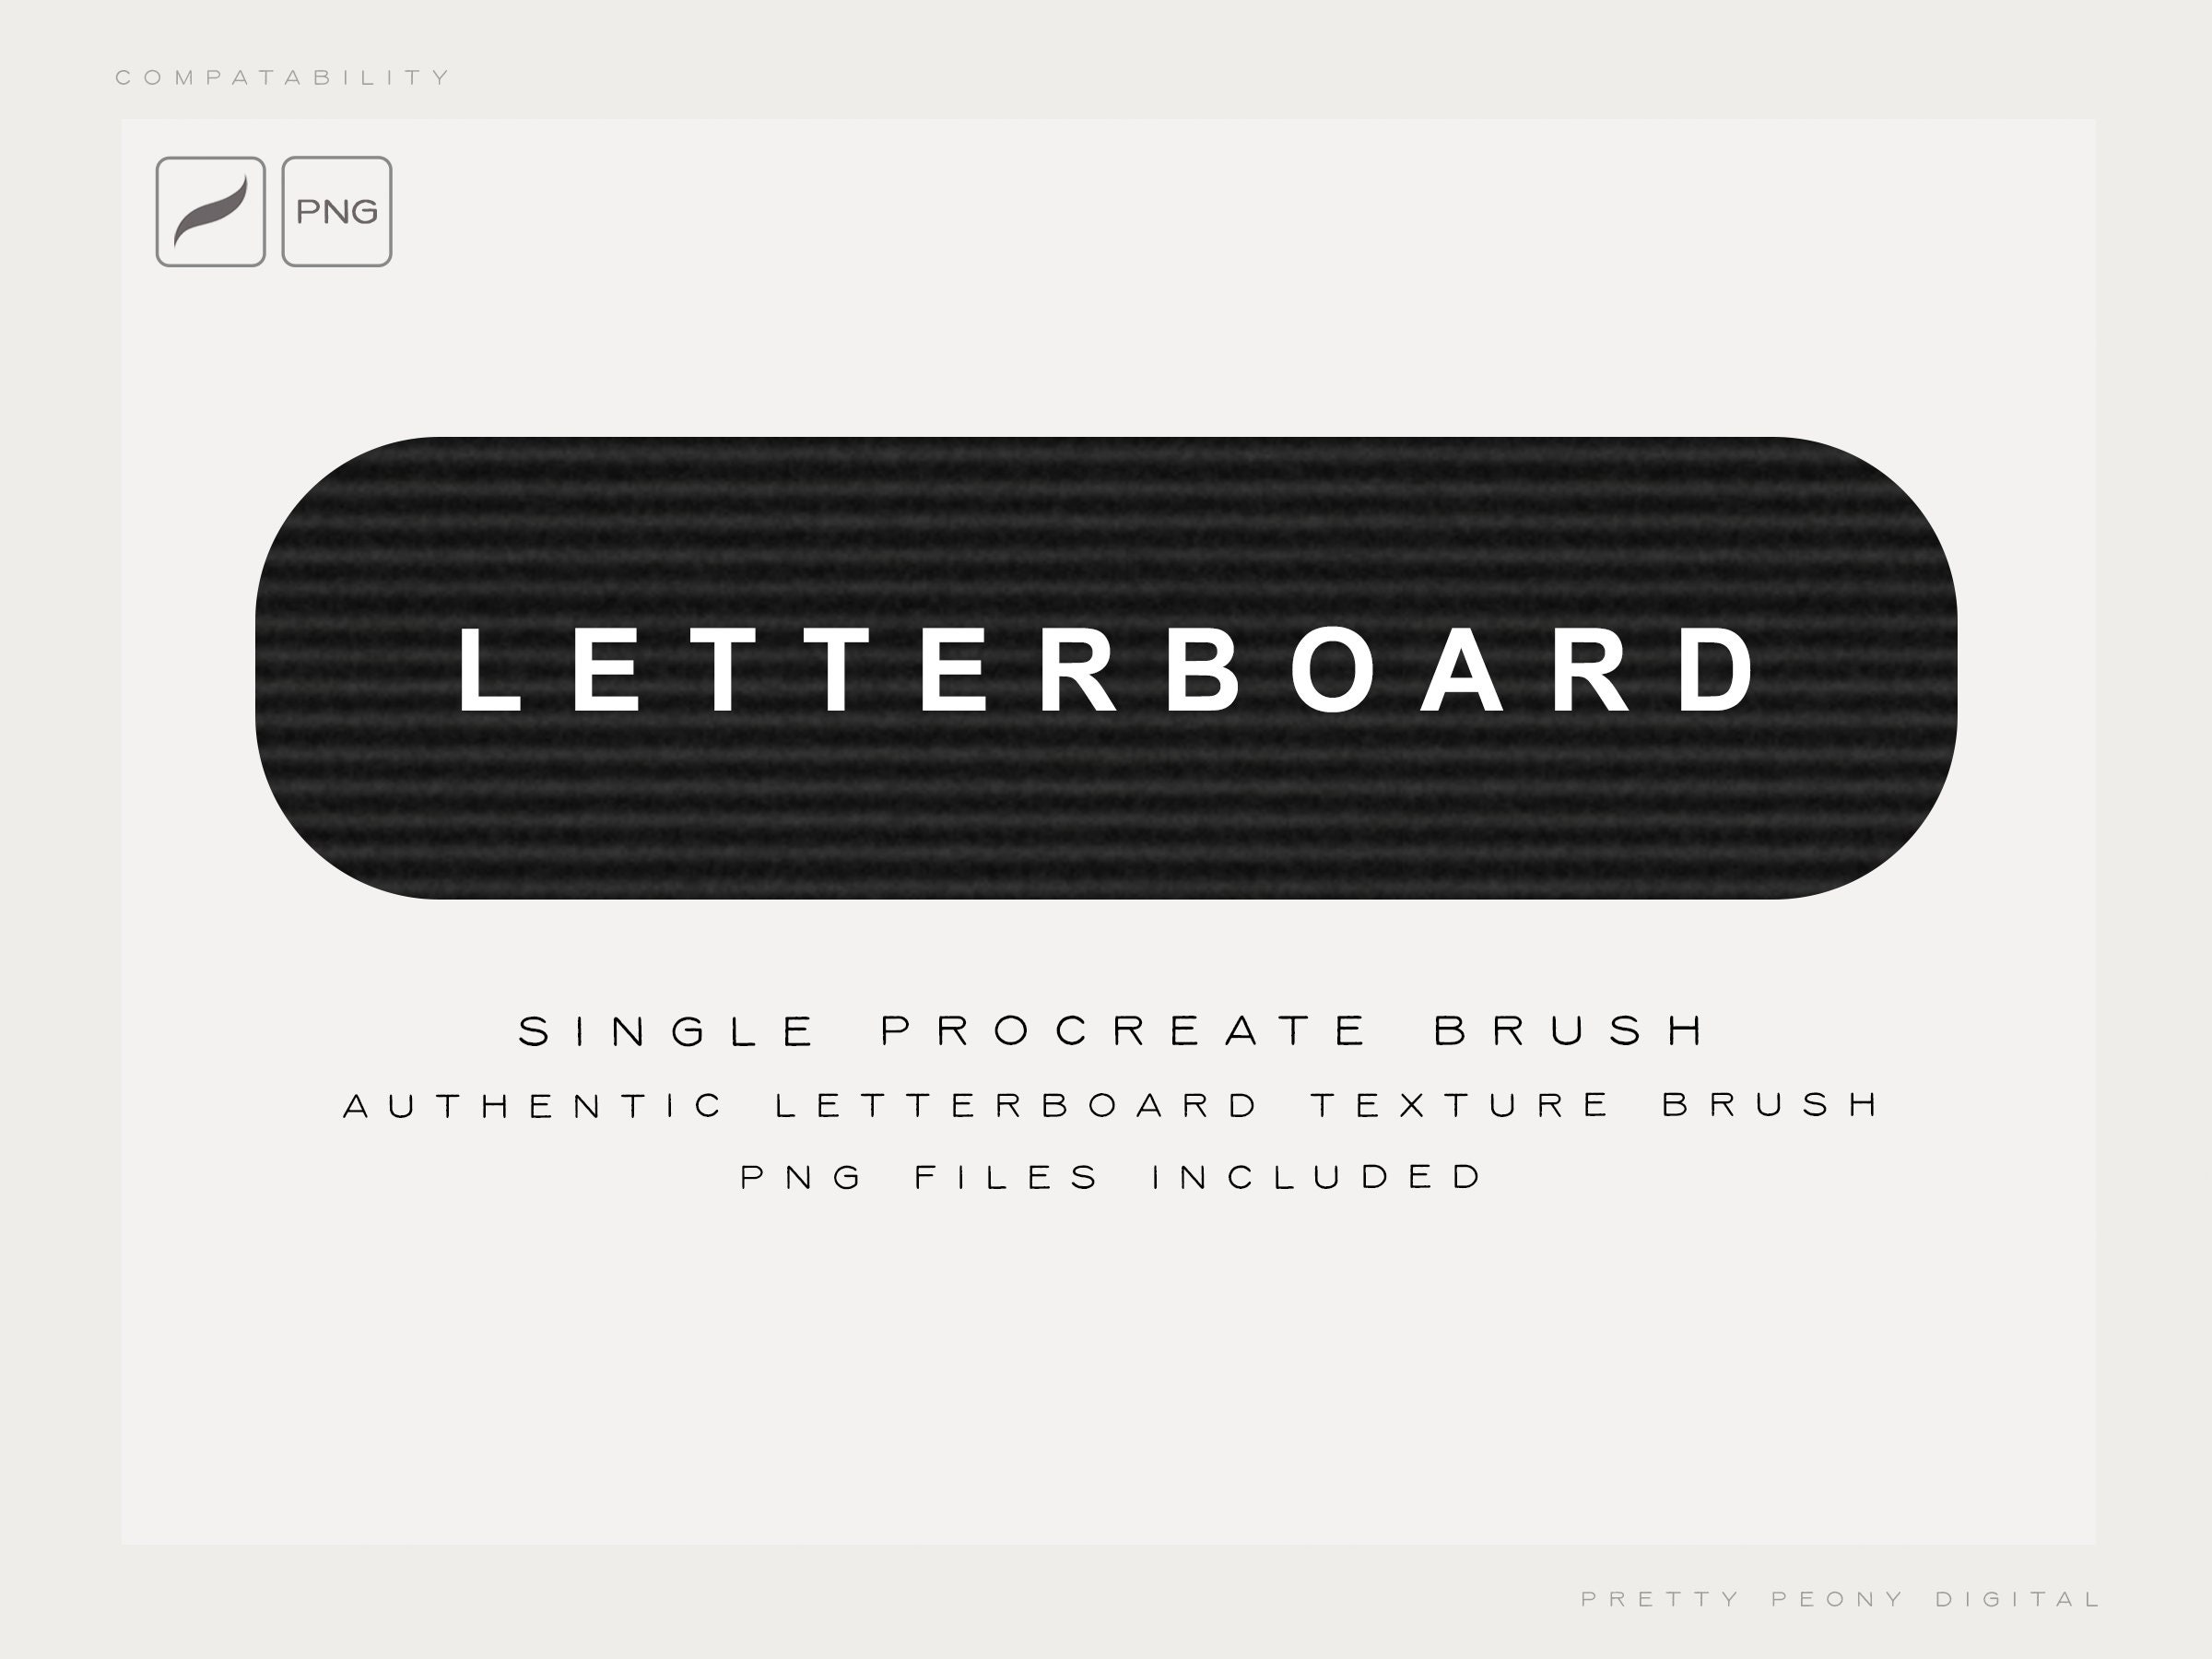 Felt Letter Board PNG Files Bundle, 6 PNG Square Letter Board With